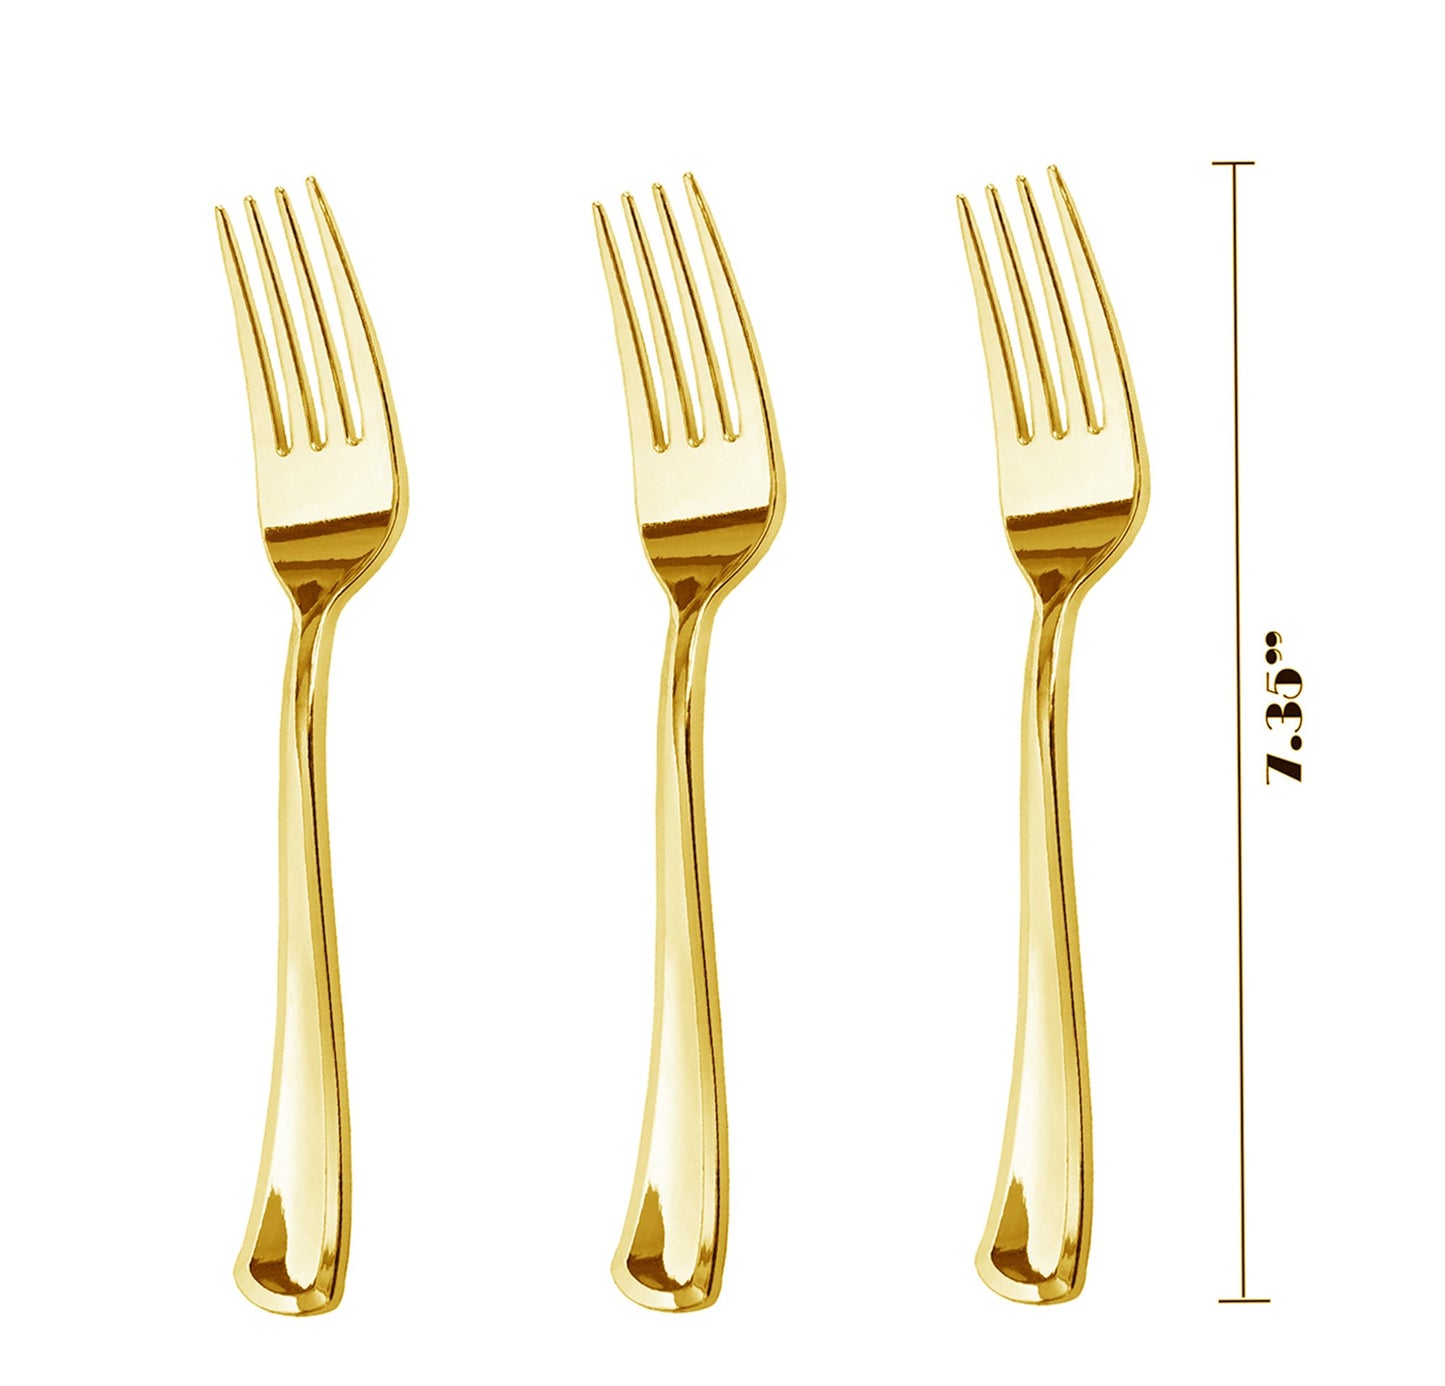 JL Prime 50 Piece Gold Plastic Forks Bulk Set, Gold Plastic Cutlery Set, Heavy Duty Utensils for Party & Wedding, Disposable Gold Flatware, Gold Plastic Forks 50 Pack